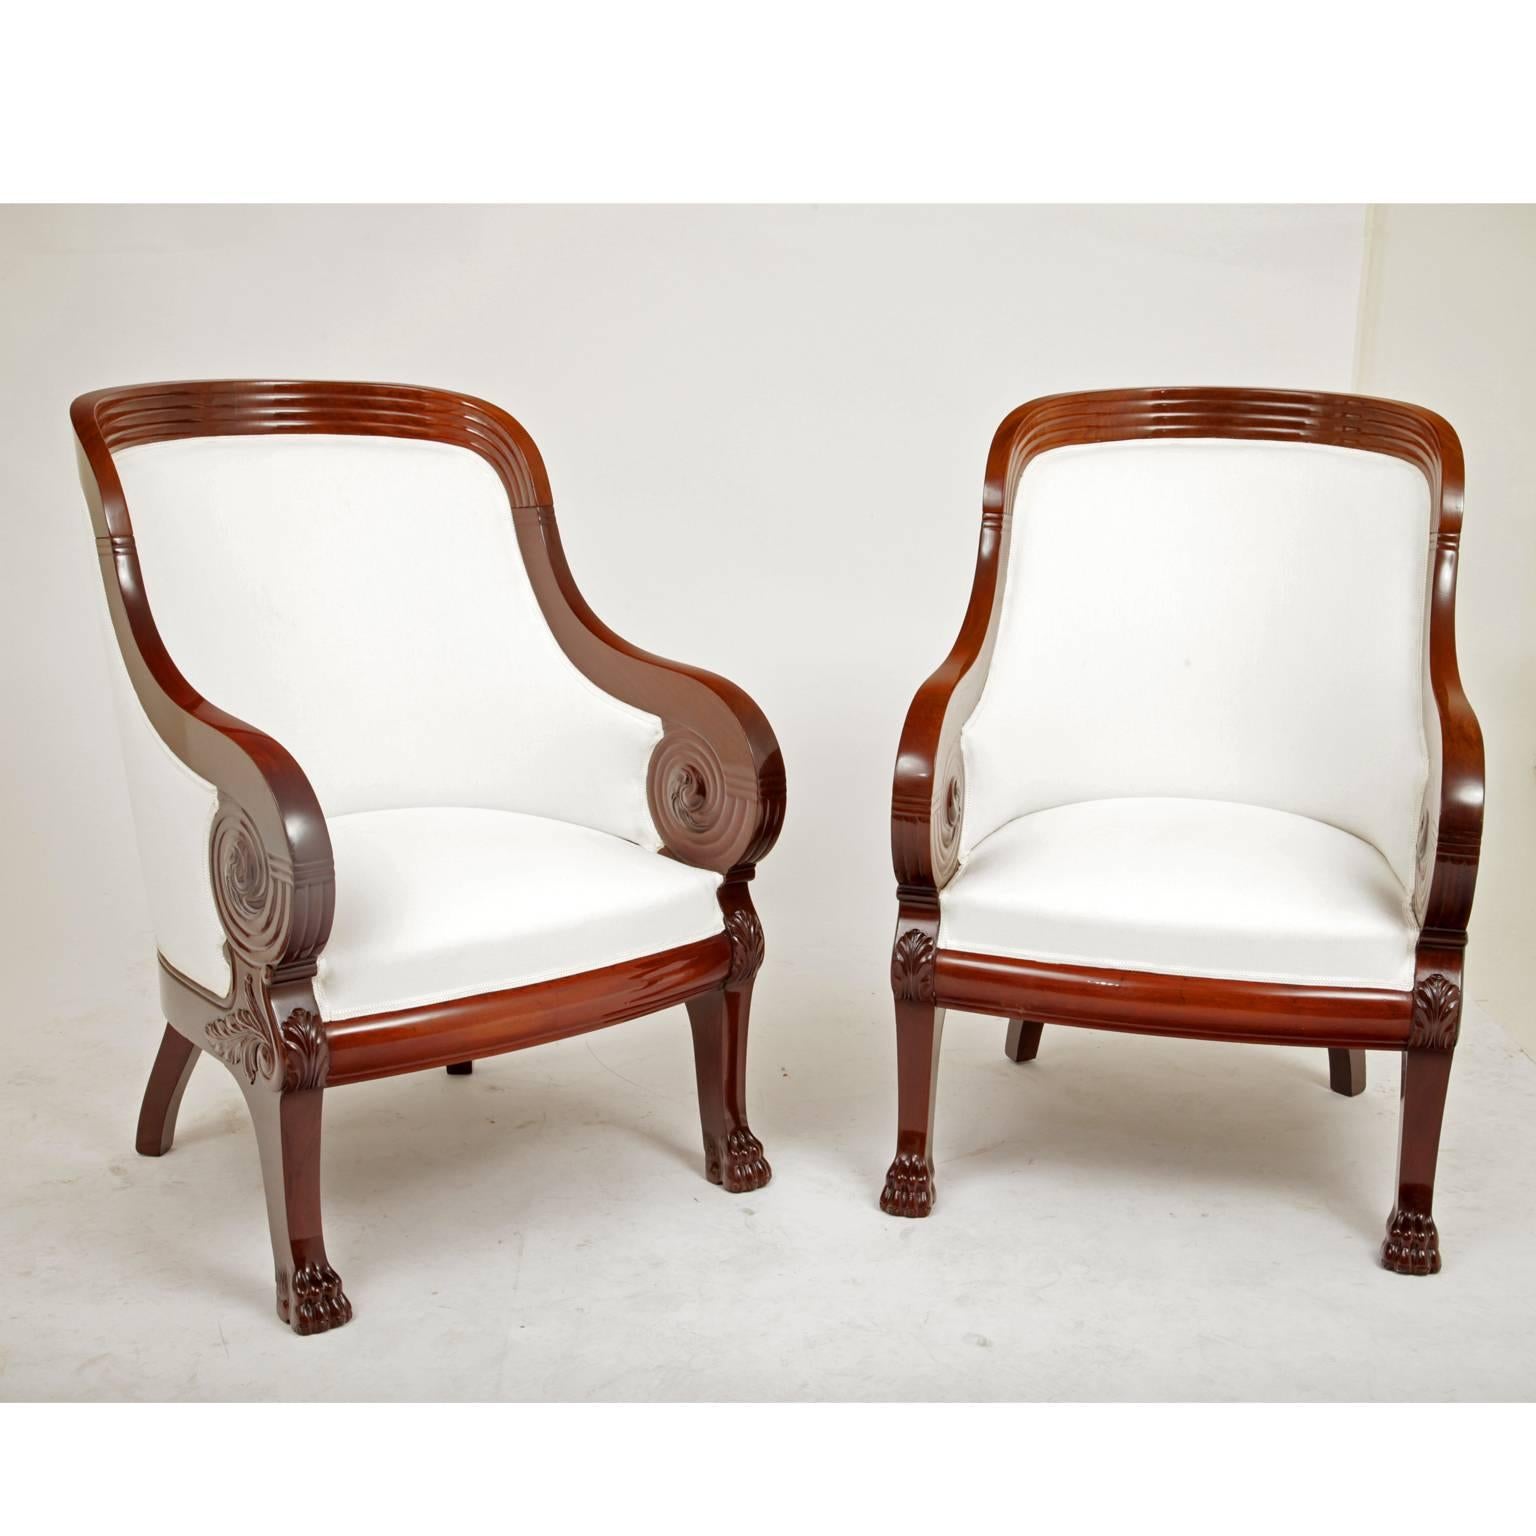 Mid-19th Century North German Bergère Chairs, circa 1830